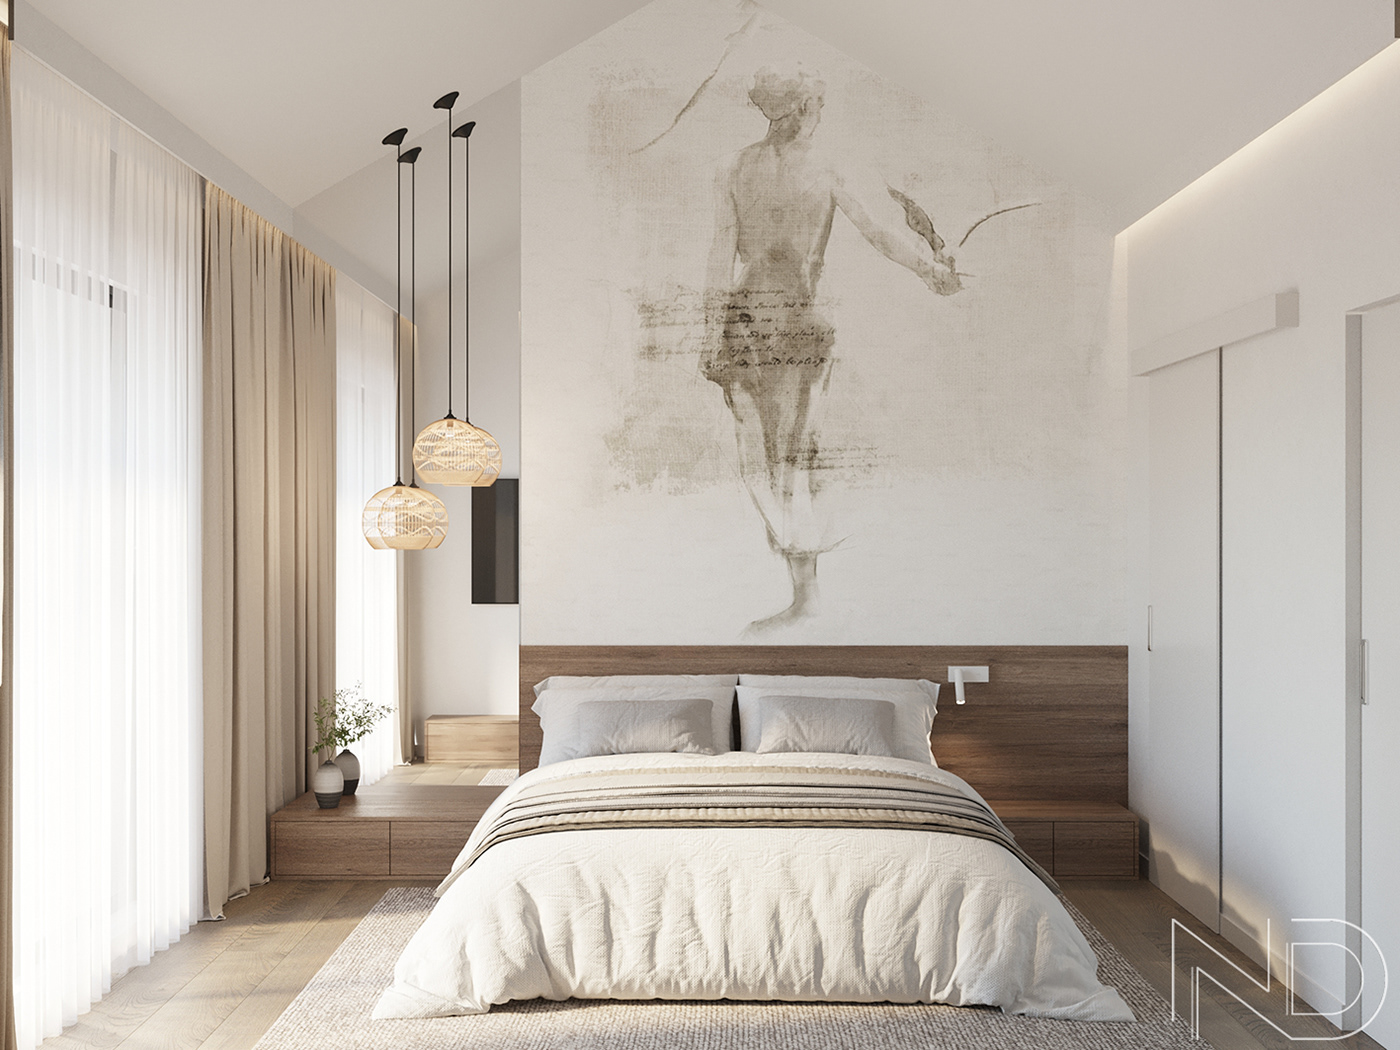 inerior design HOUSE DESIGN living room bedroom design laundry ecodesign Minimalism interior visualization 3ds max